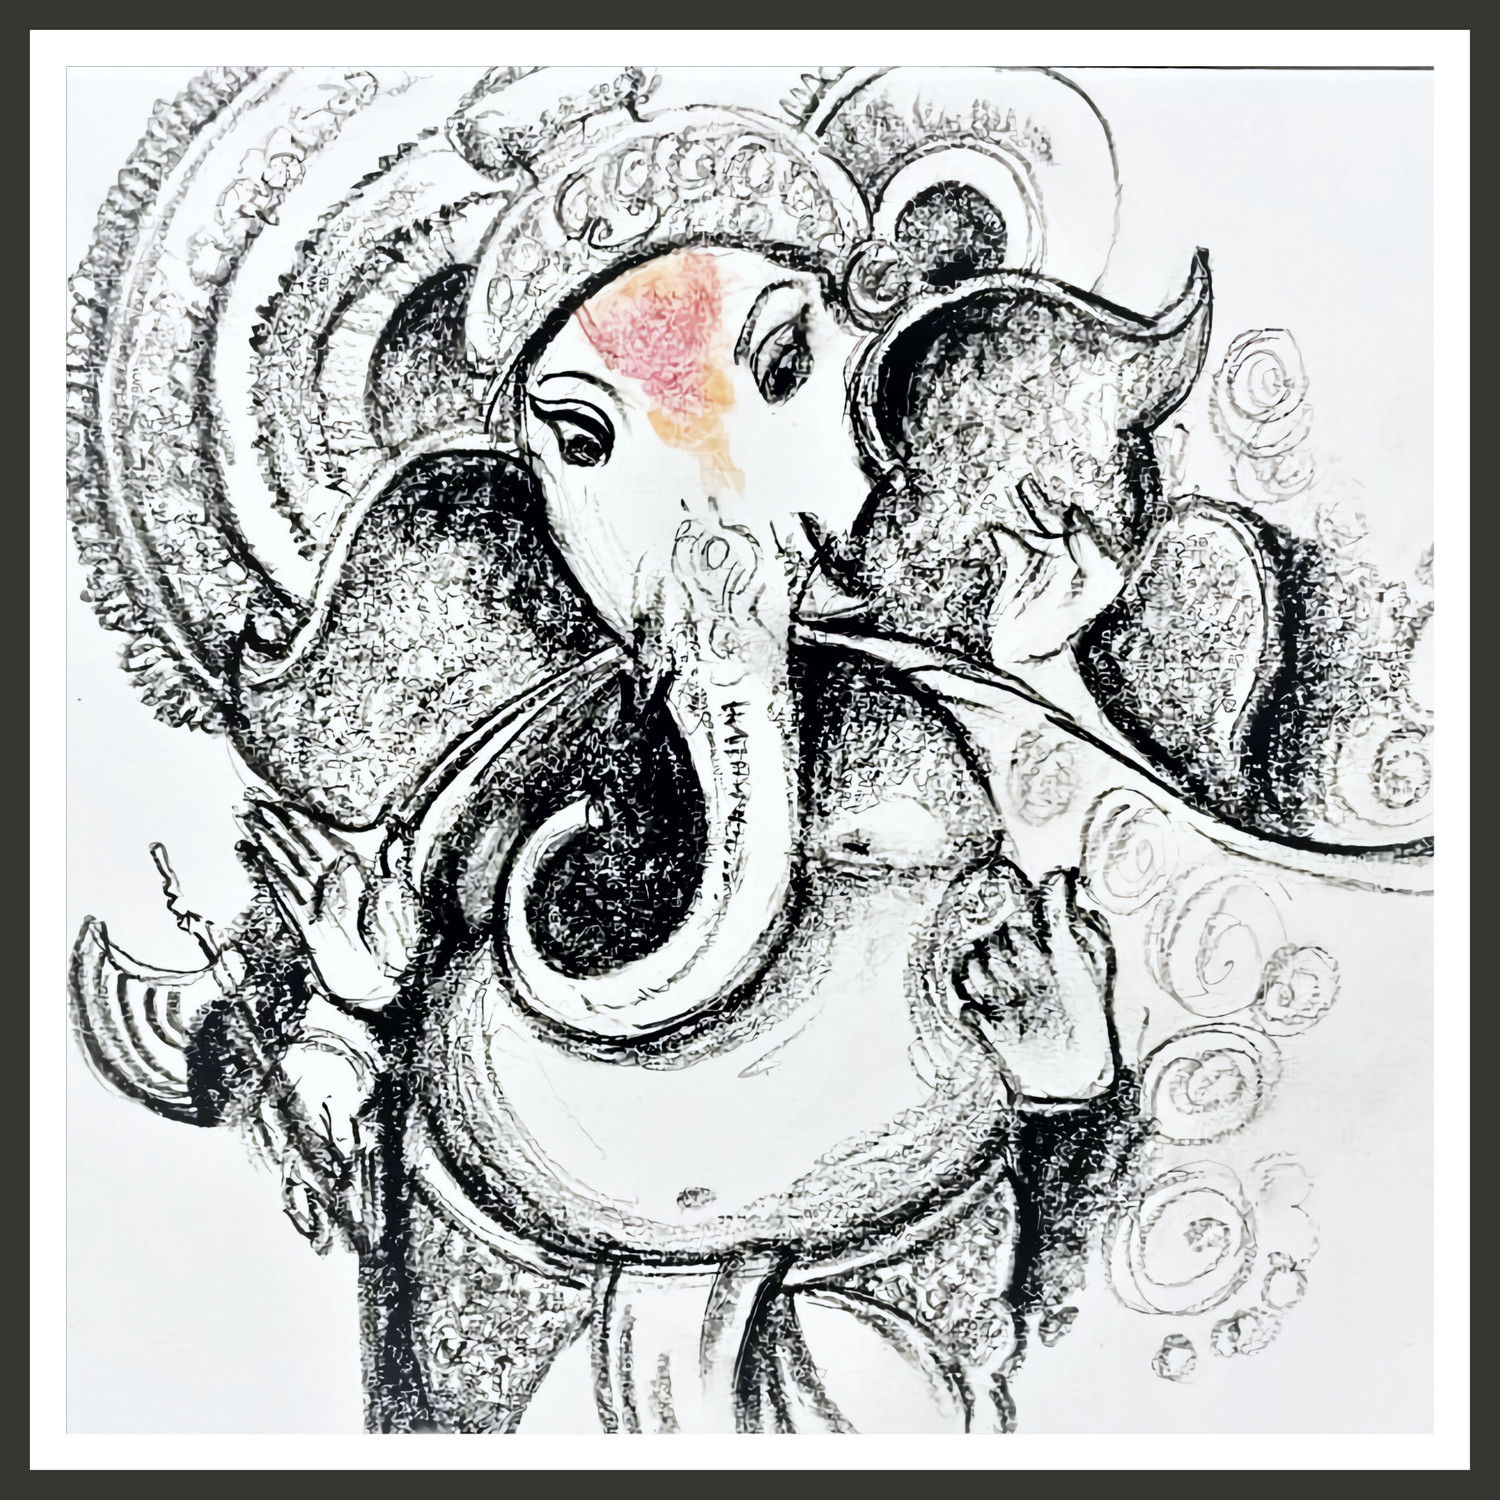 Buy Ganpati Bappa Morya! Handmade Painting by ANUPAMA JOSHI.  Code:ART_8519_66115 - Paintings for Sale online in India.